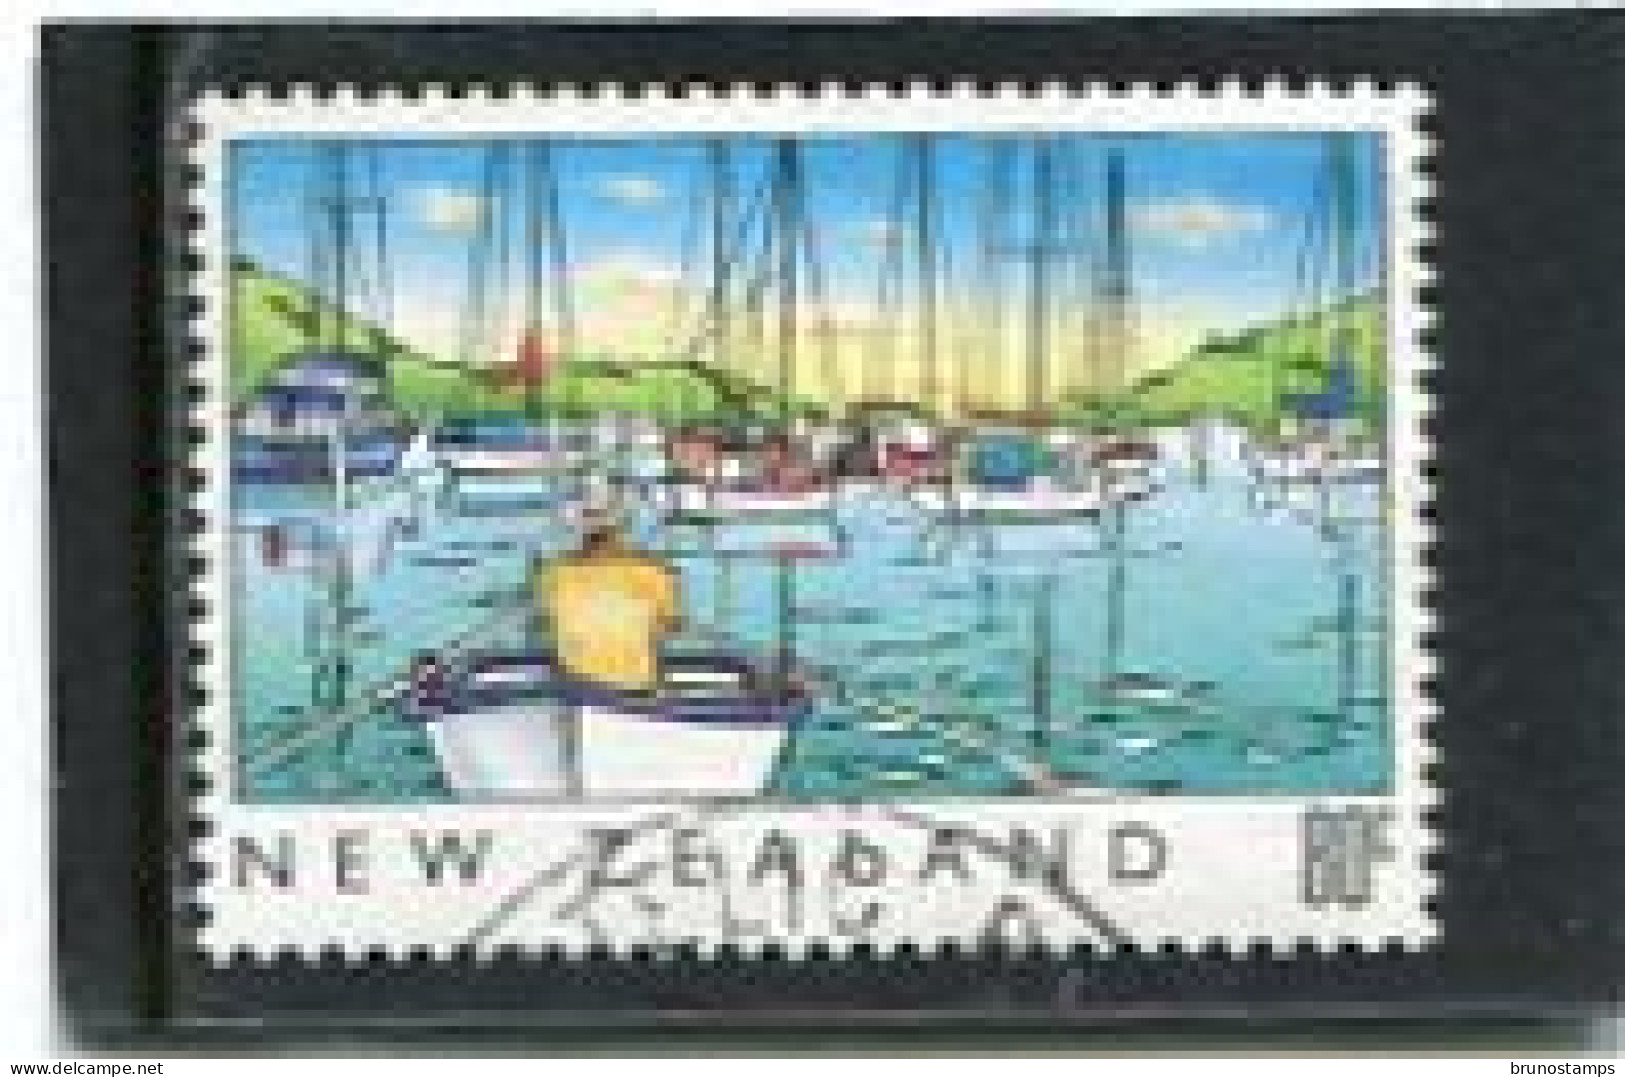 NEW ZEALAND - 1989  80c  ROWING BOAT  FINE USED - Usati